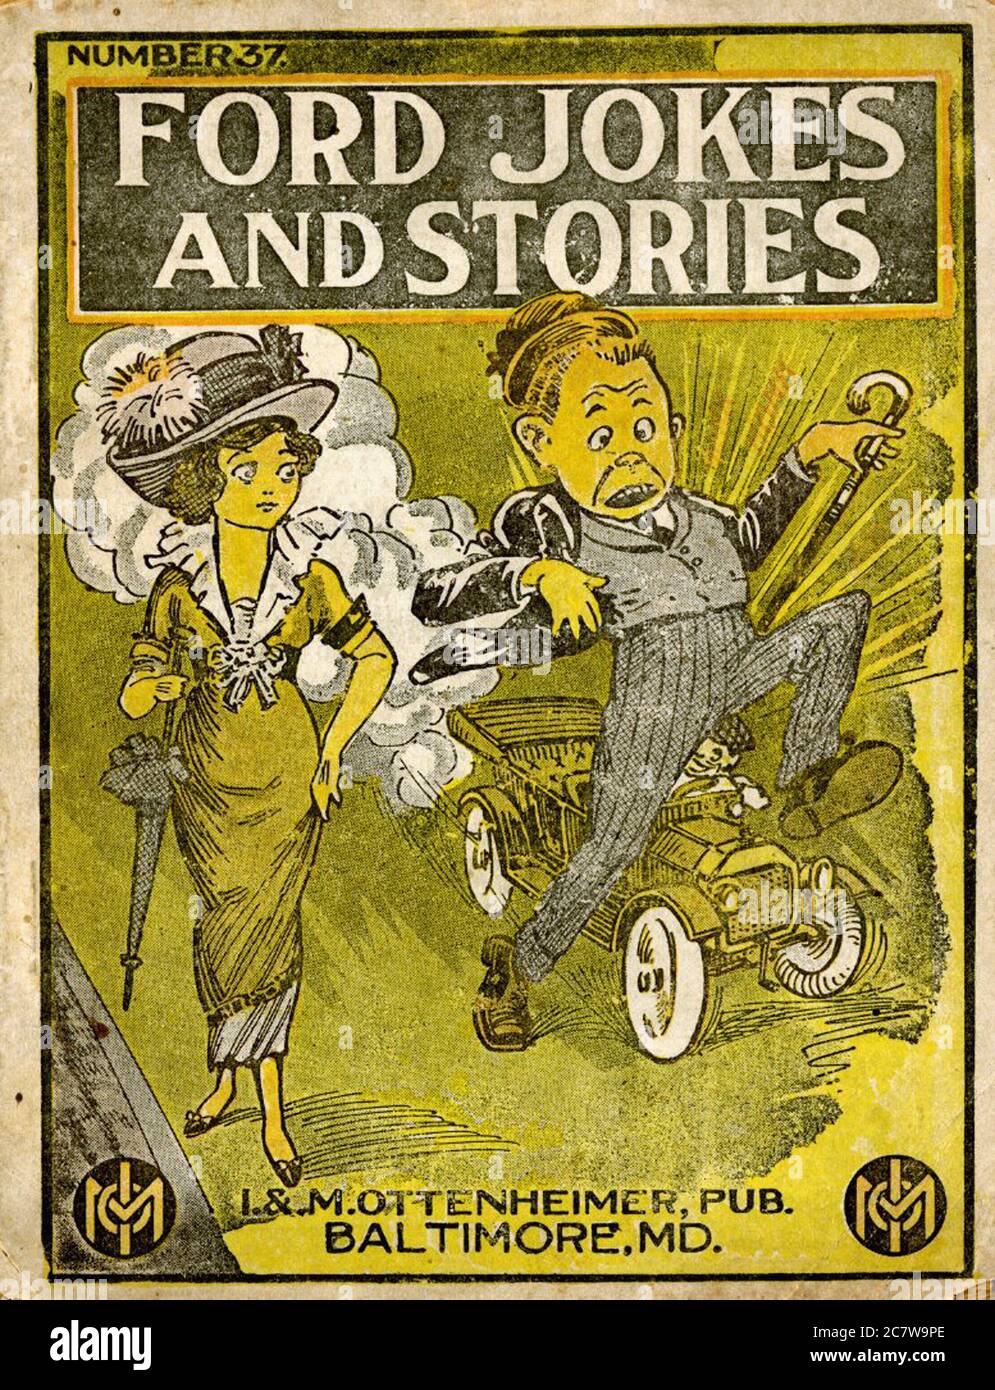 Ford Jokes & Stories - Vintage early twenty century american jokes magazine Stock Photo